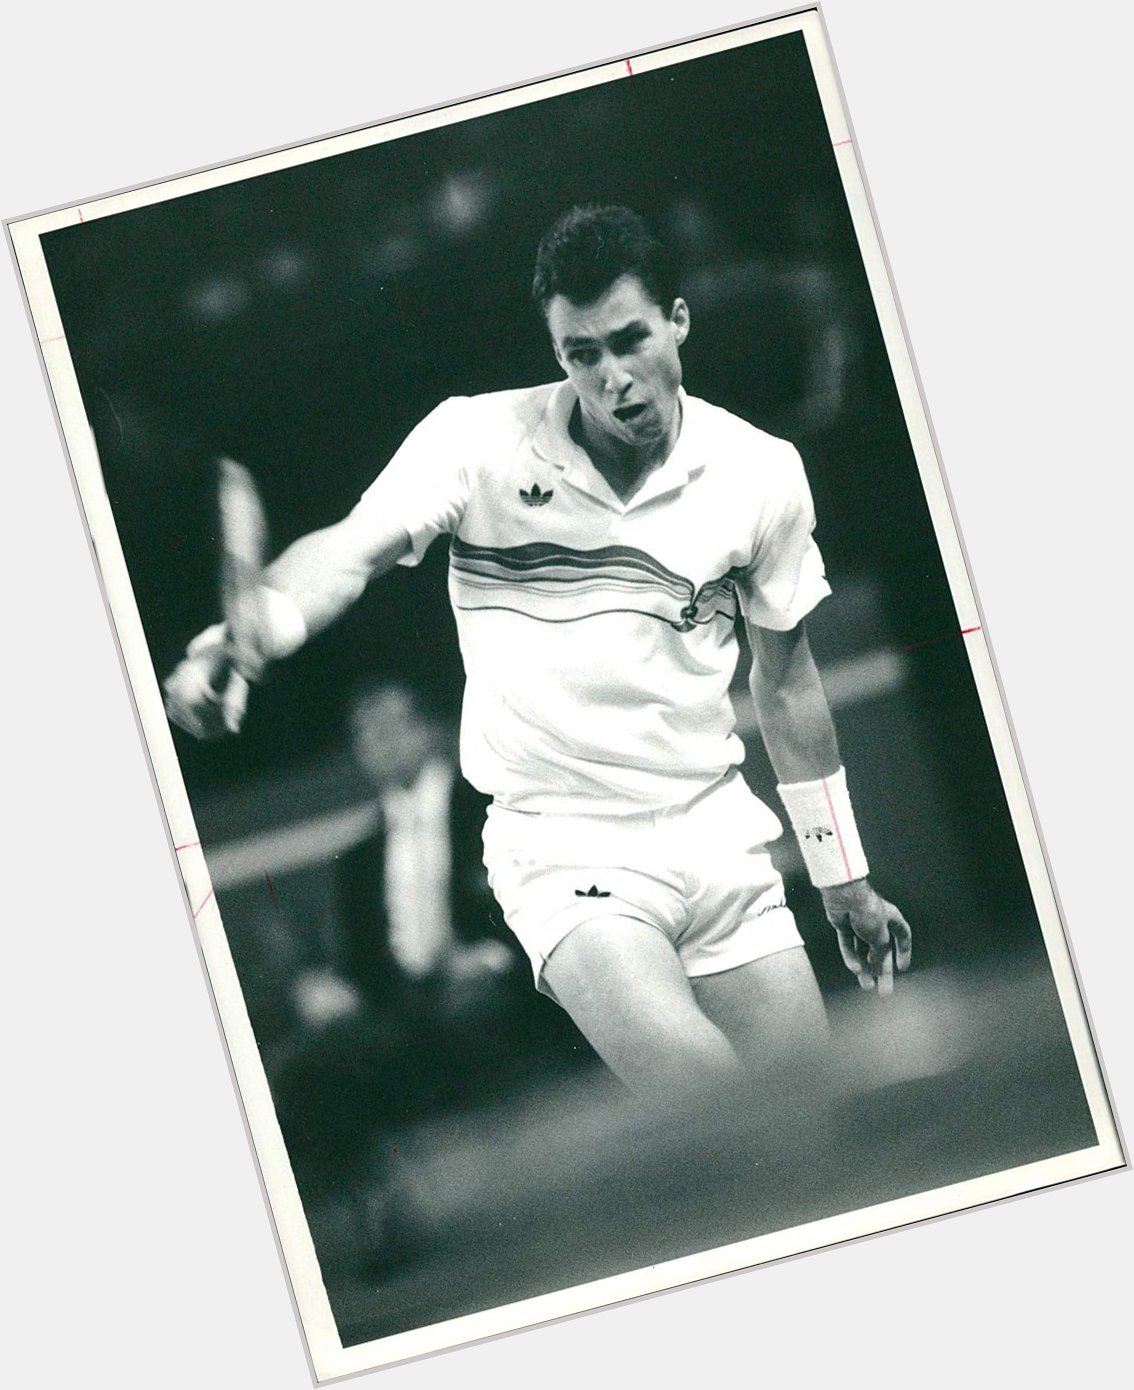 Happy birthday Ivan Lendl(born 7.3.1960)  